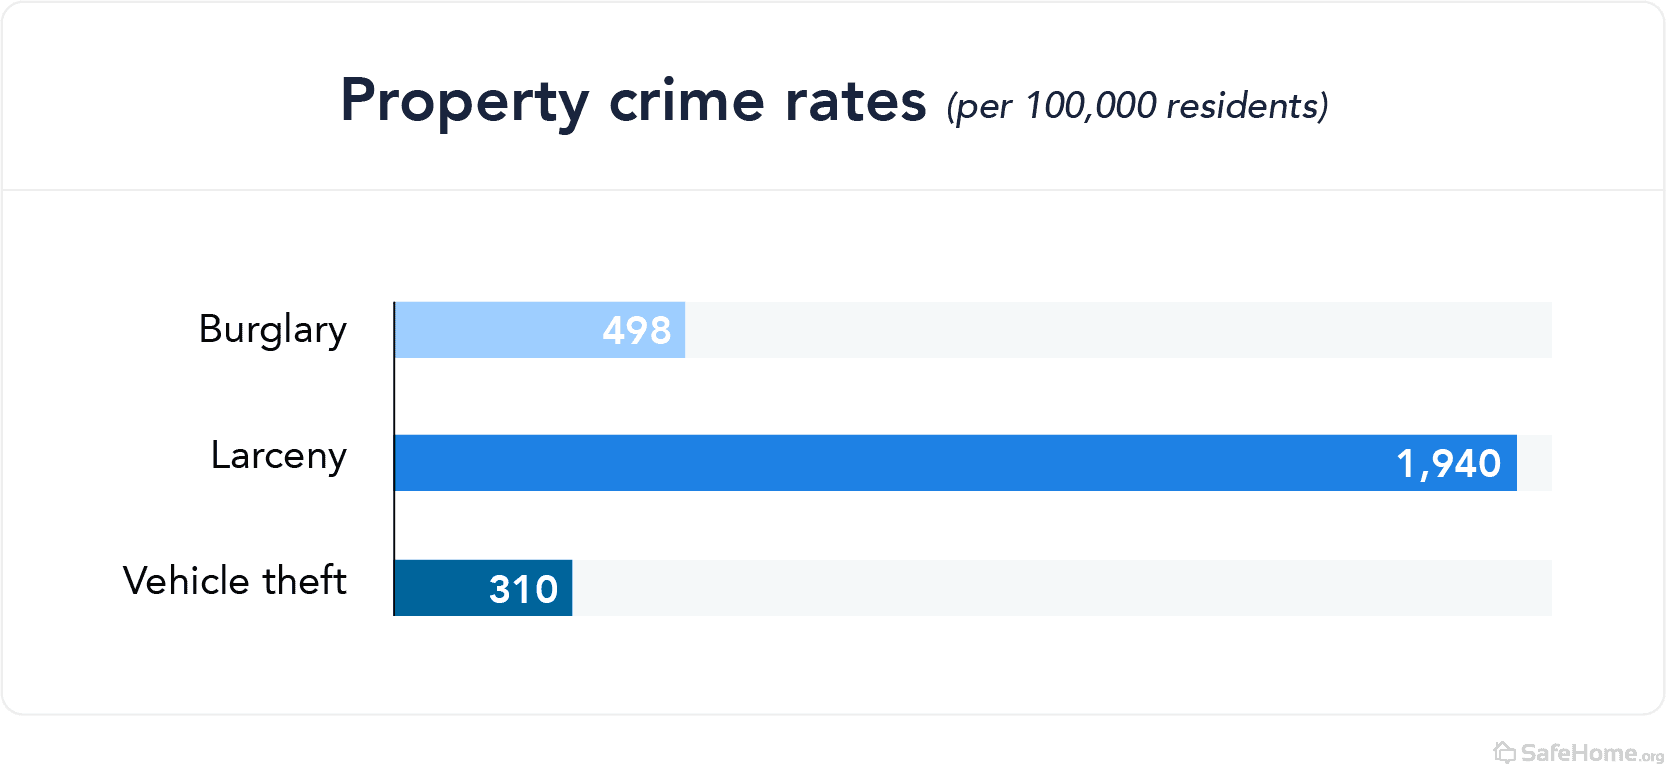 Louisiana property crime rates